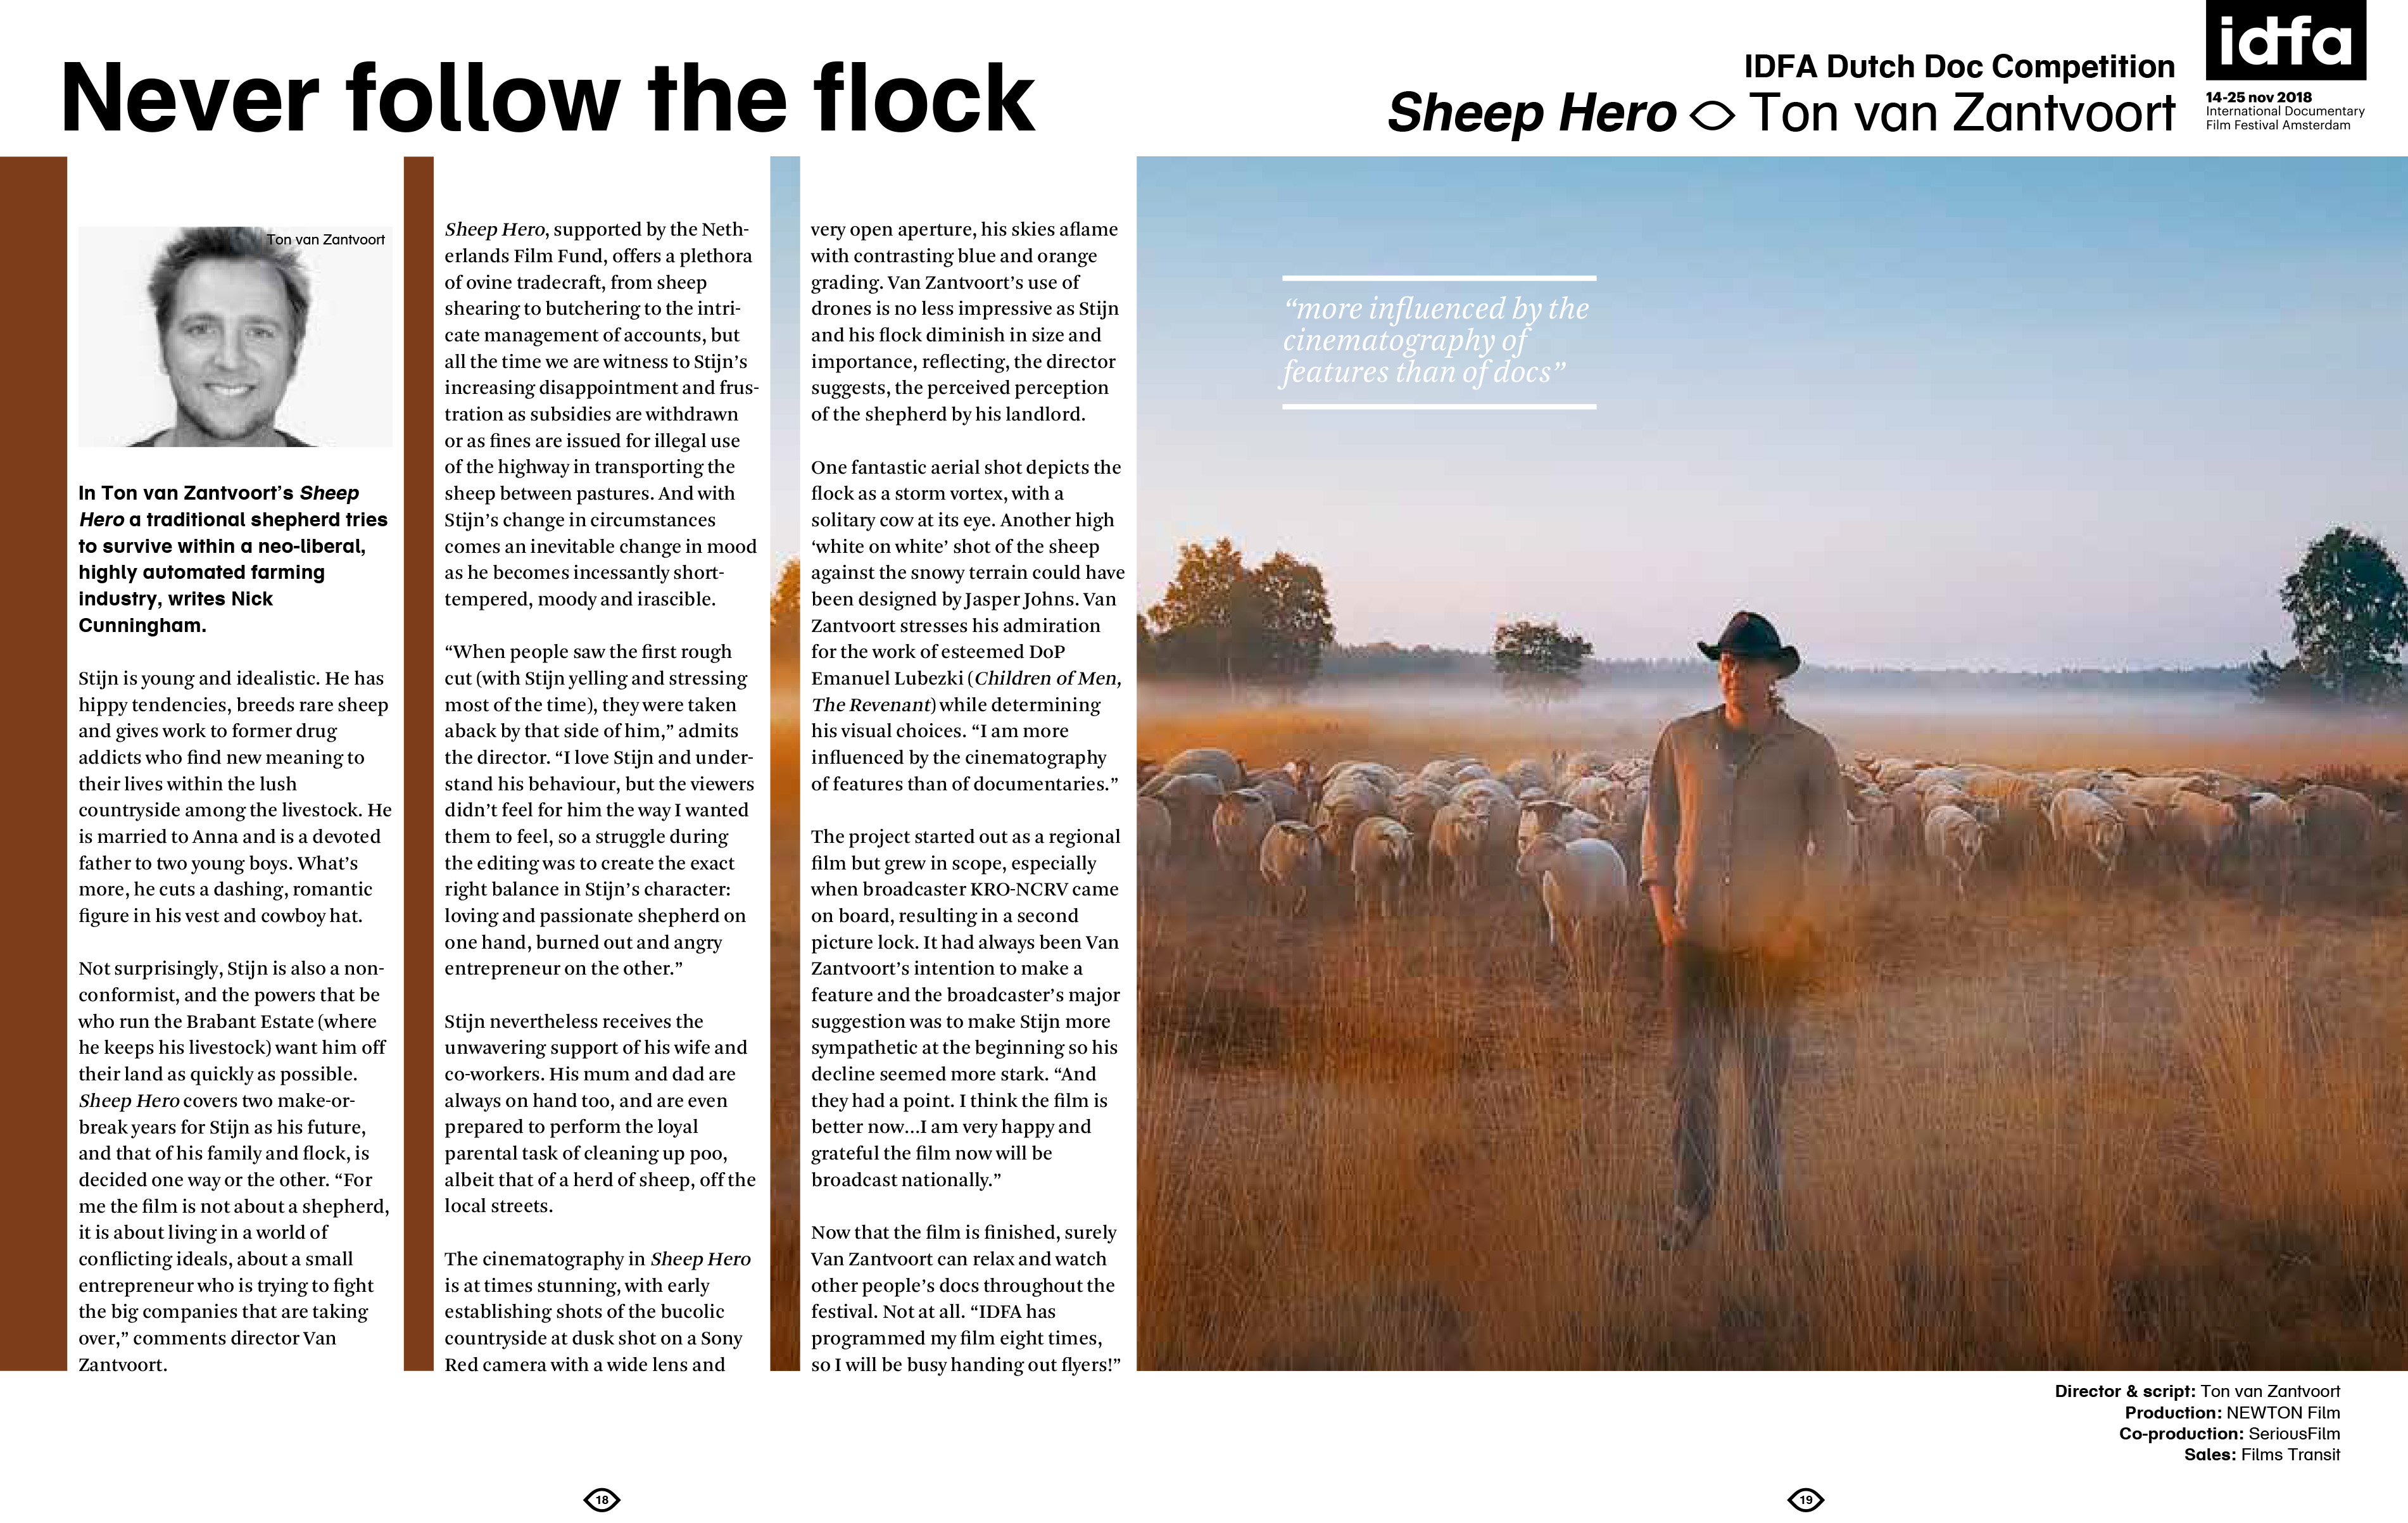 SHEEP HERO - Never follow the flock